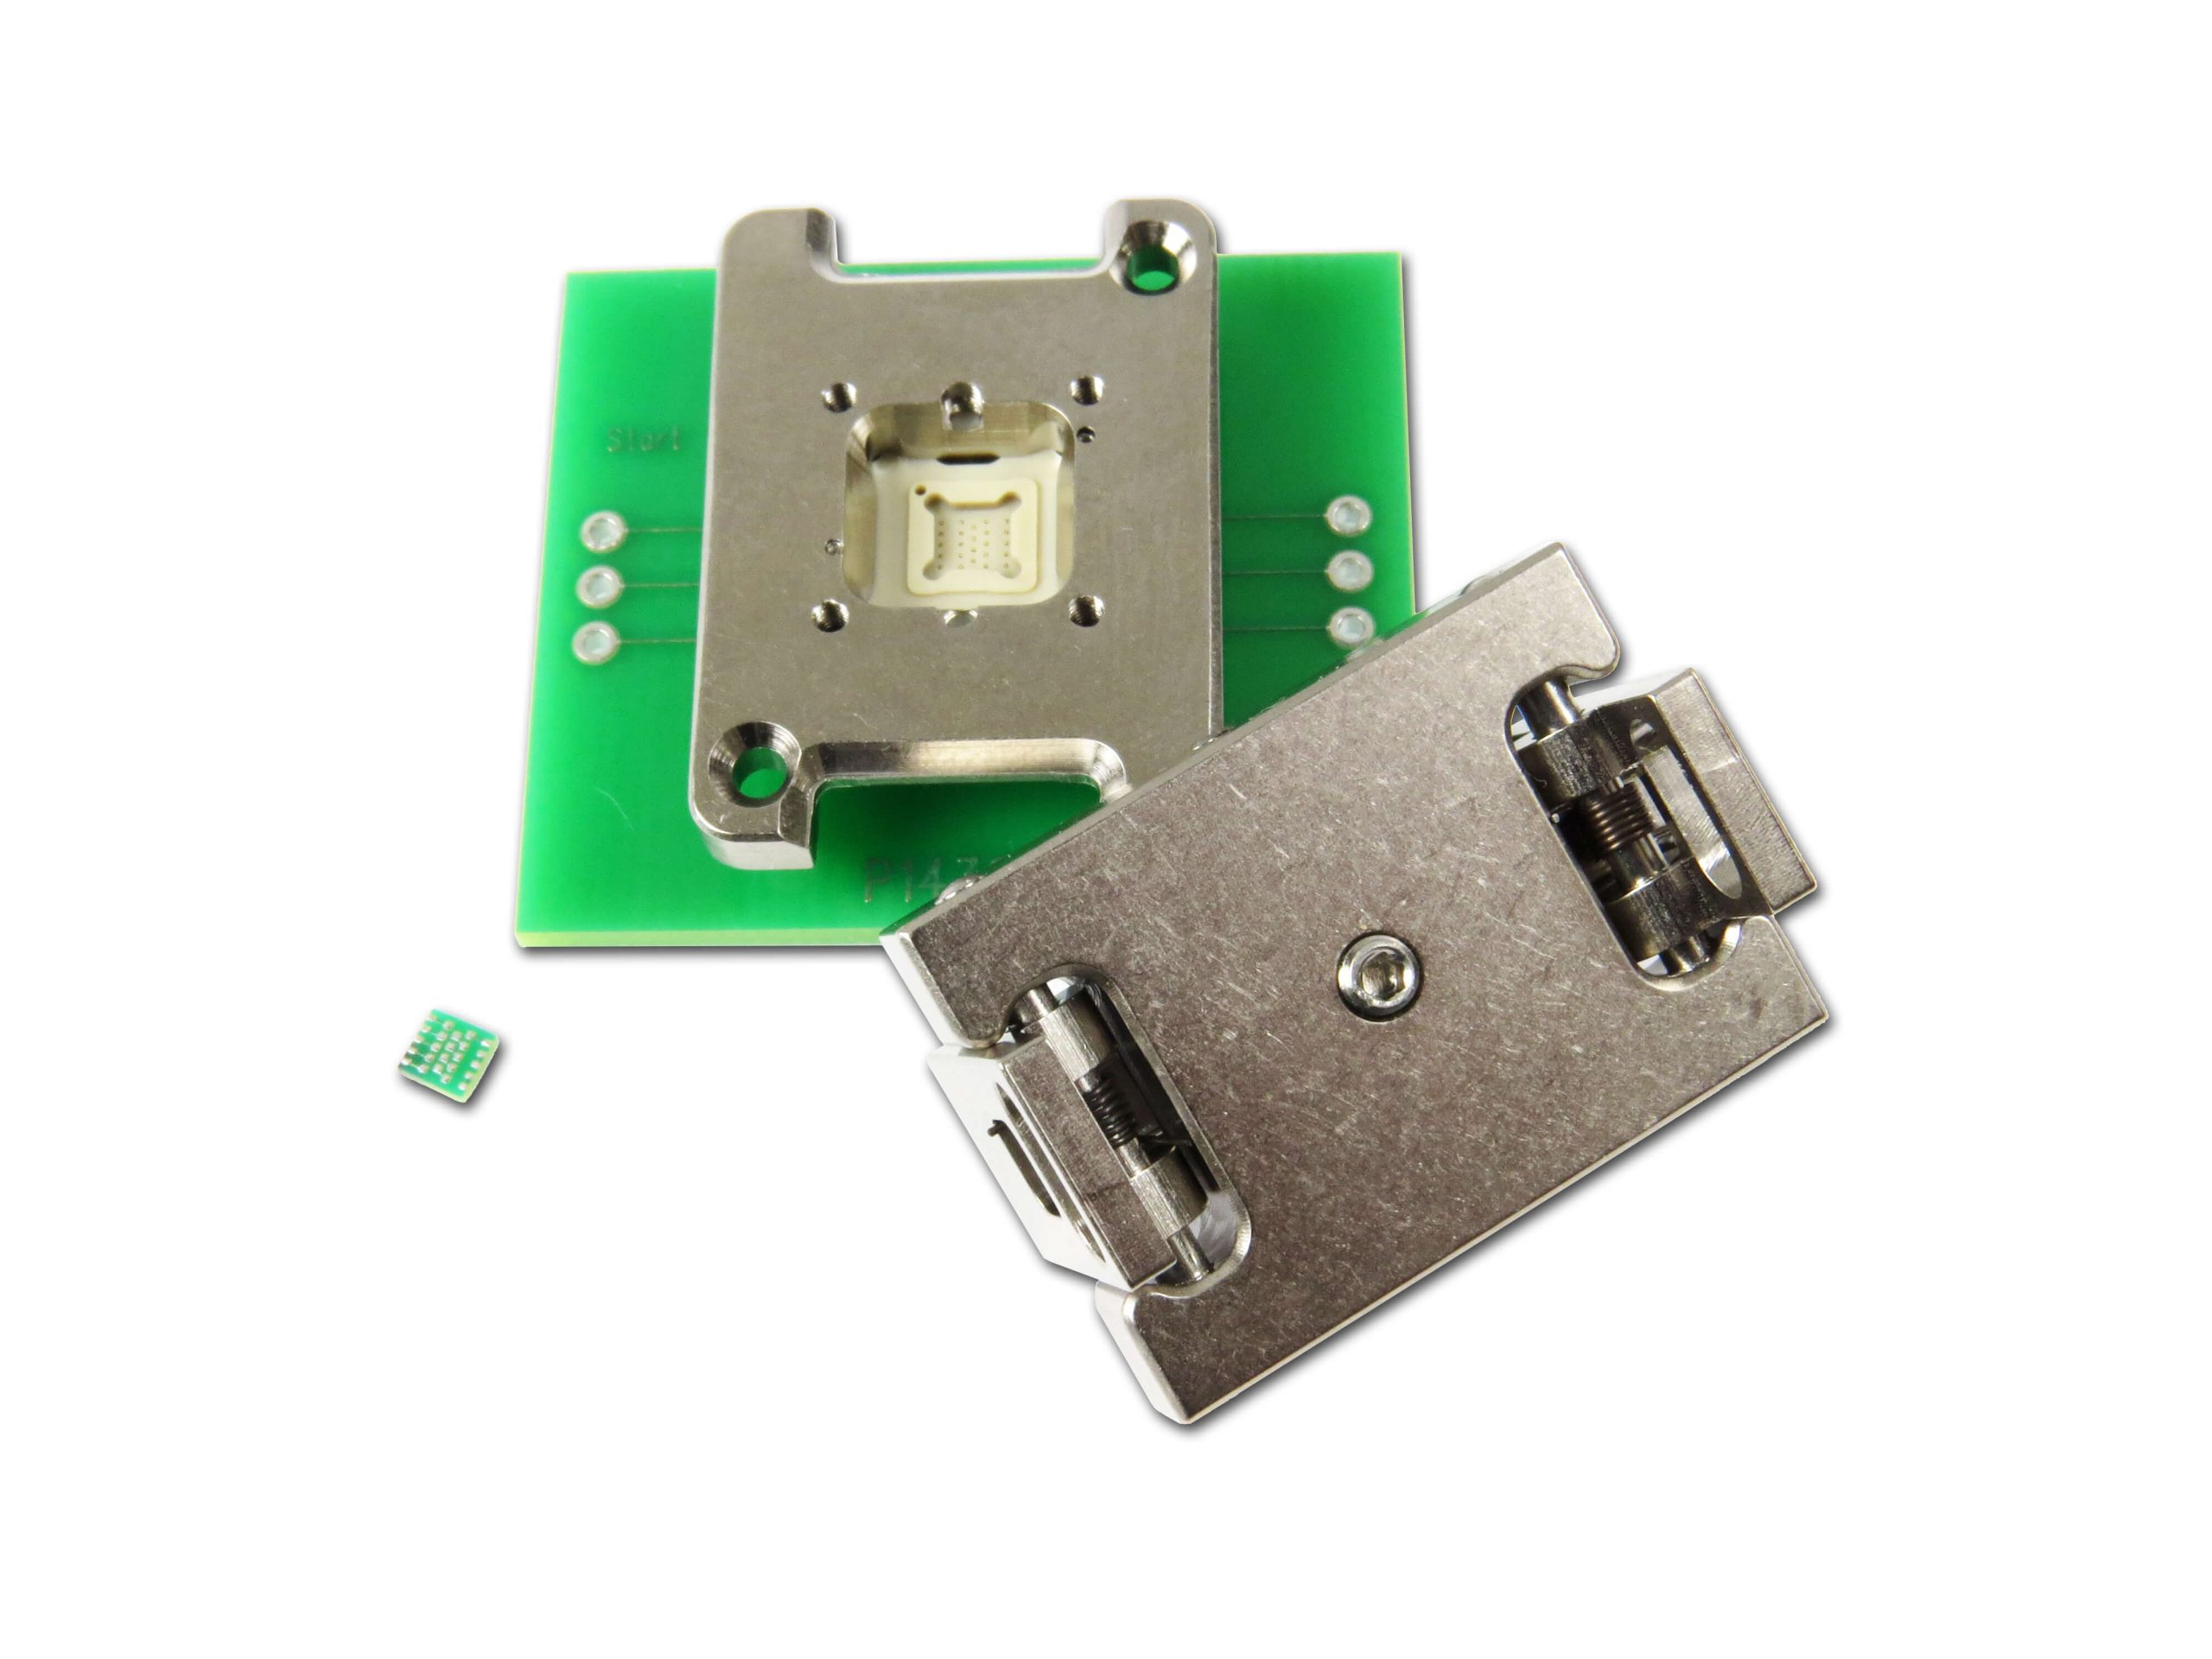 Clamshell Spring Pin QFN Socket for Microchip’s 10TDFN